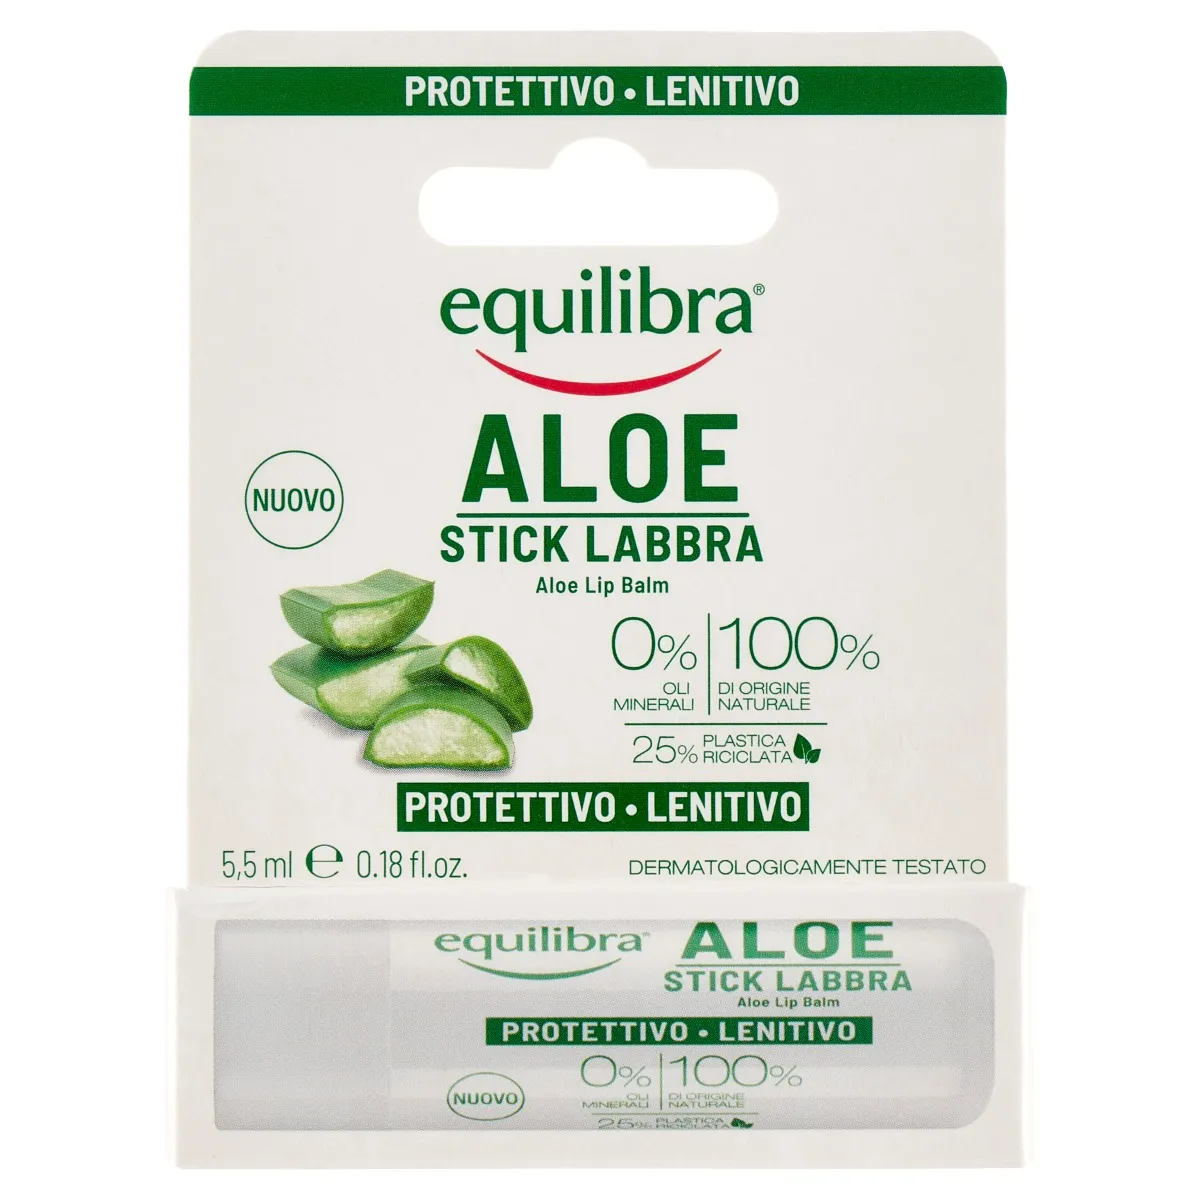 Equilibra Stick Labbra Aloe 5,5 ml 20% Aloe Vera